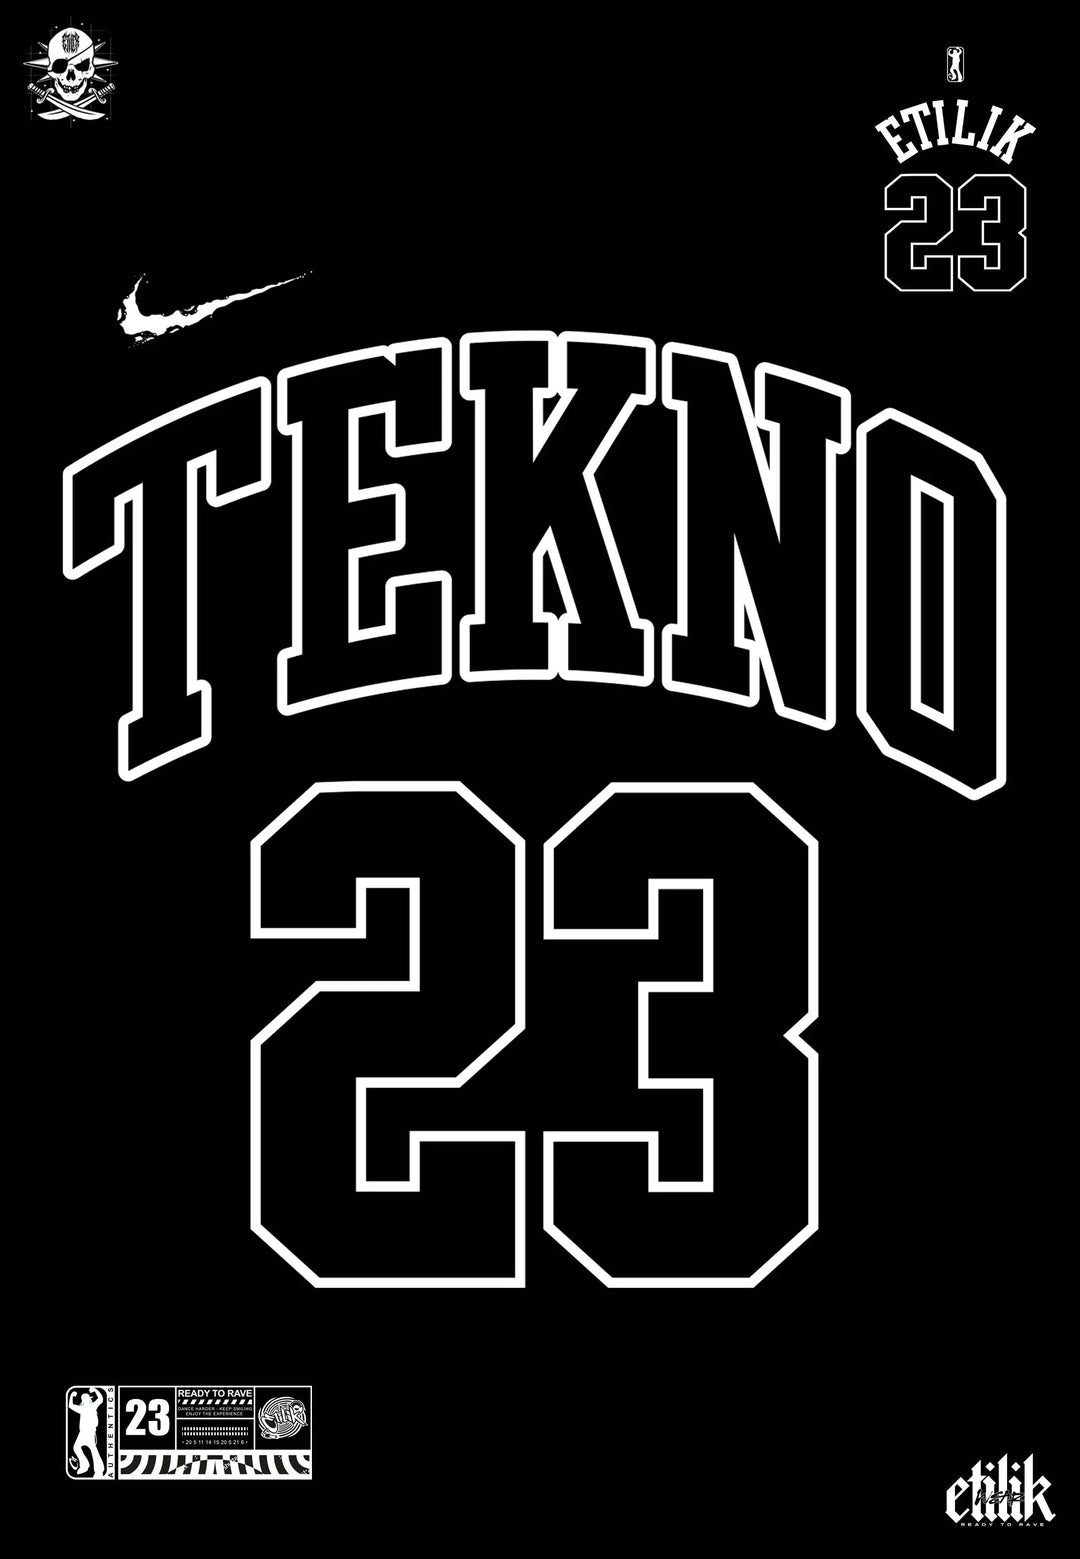 23 Tekno - T-shirt - Etilik Wear 